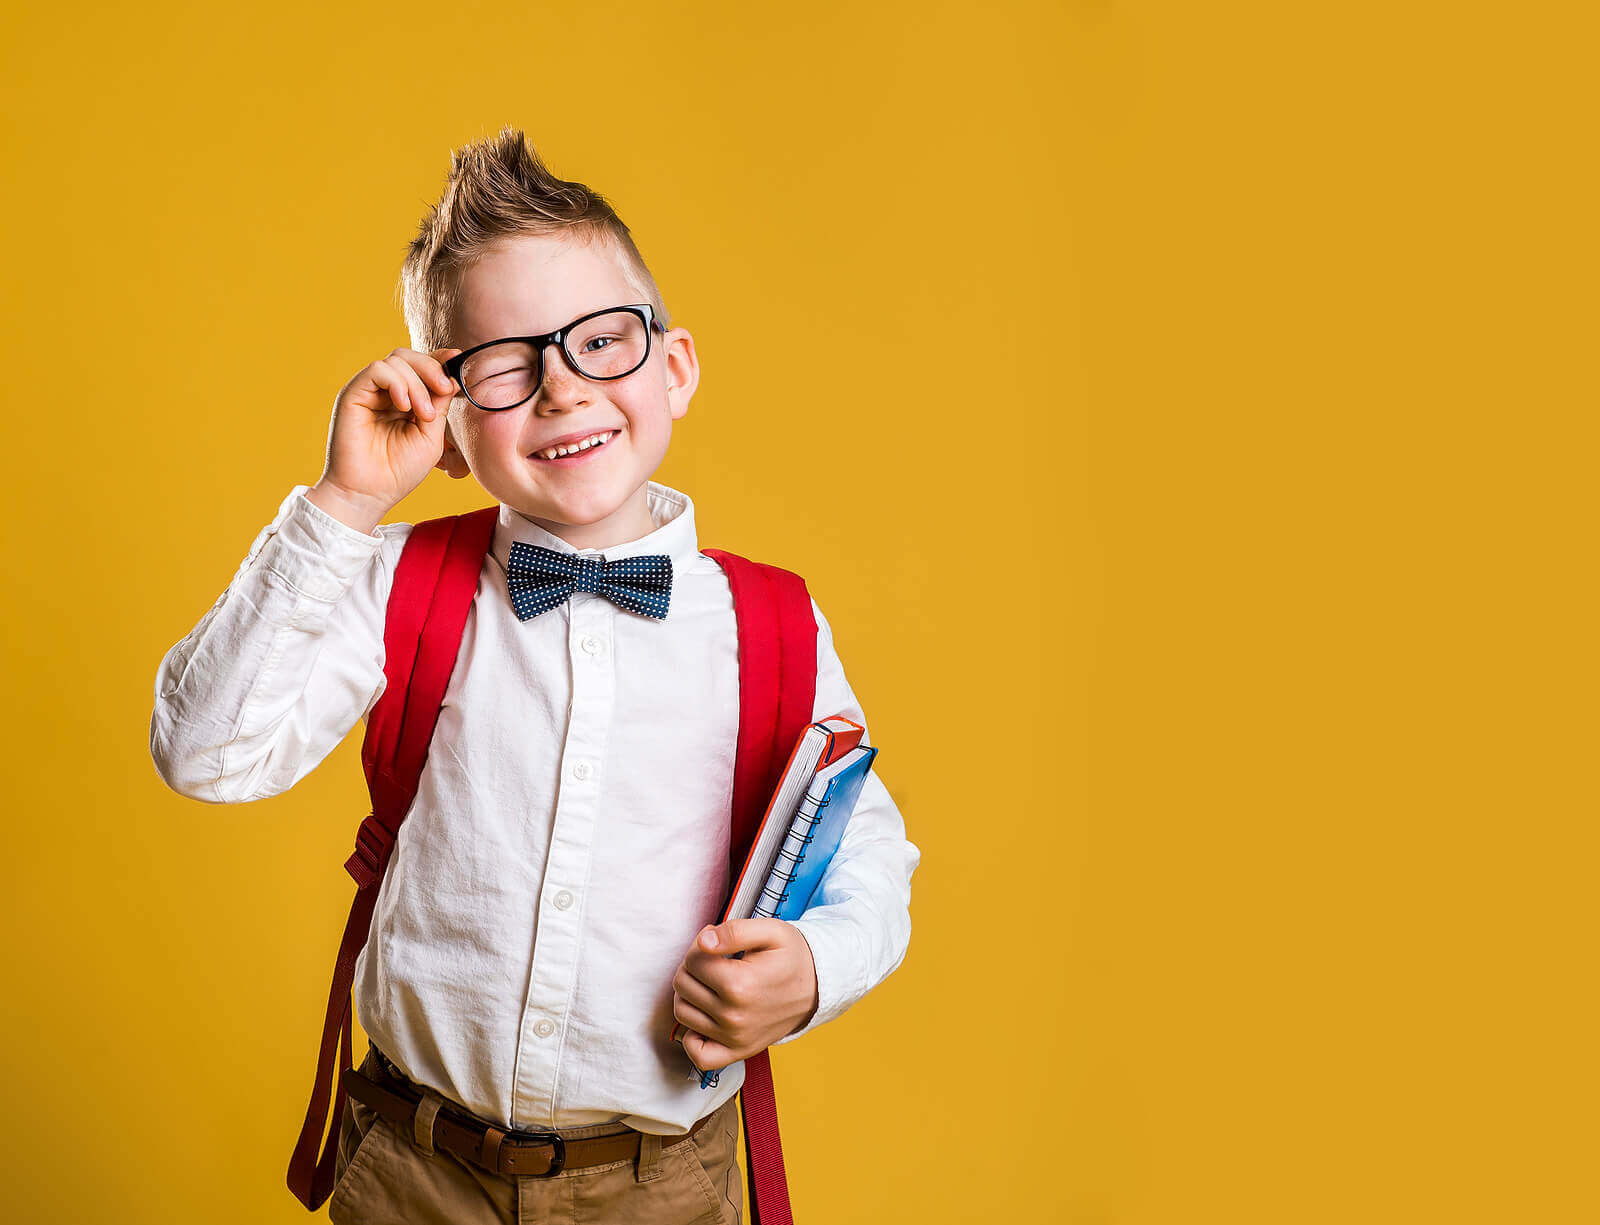 11 Characteristics of Child Geniuses